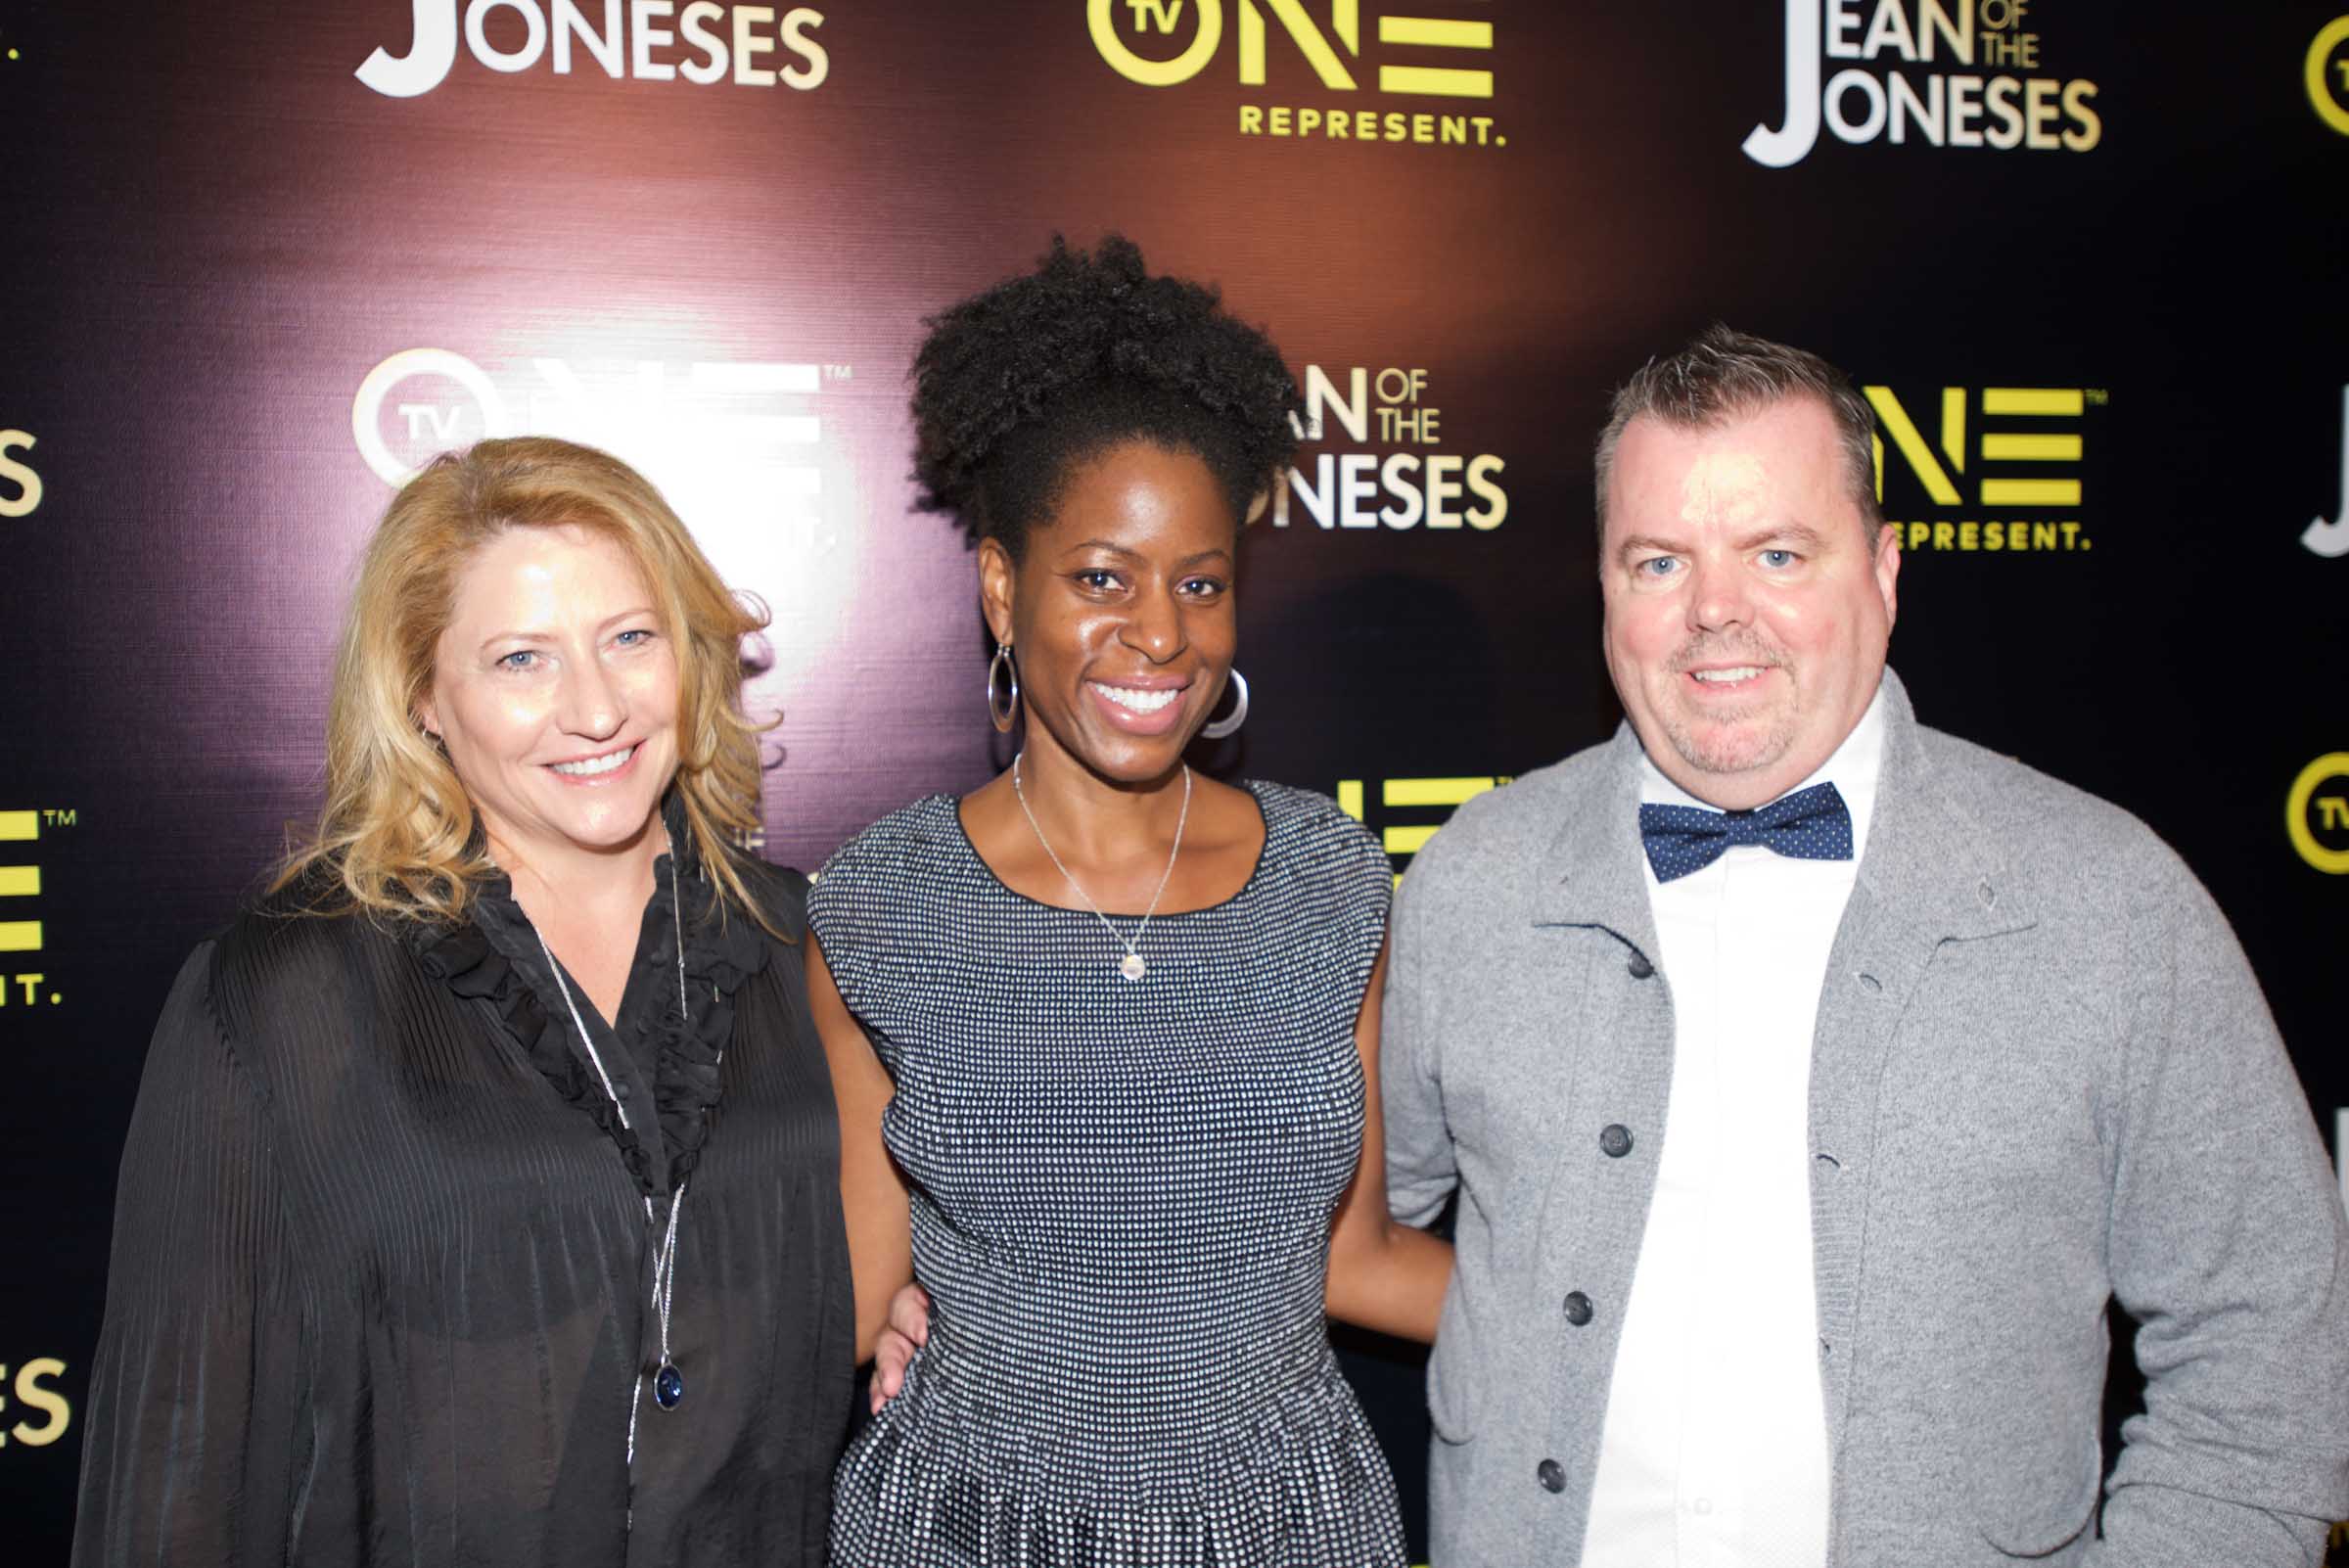 Jean of the Joneses movie premiere. Photo by Earl Gibson III